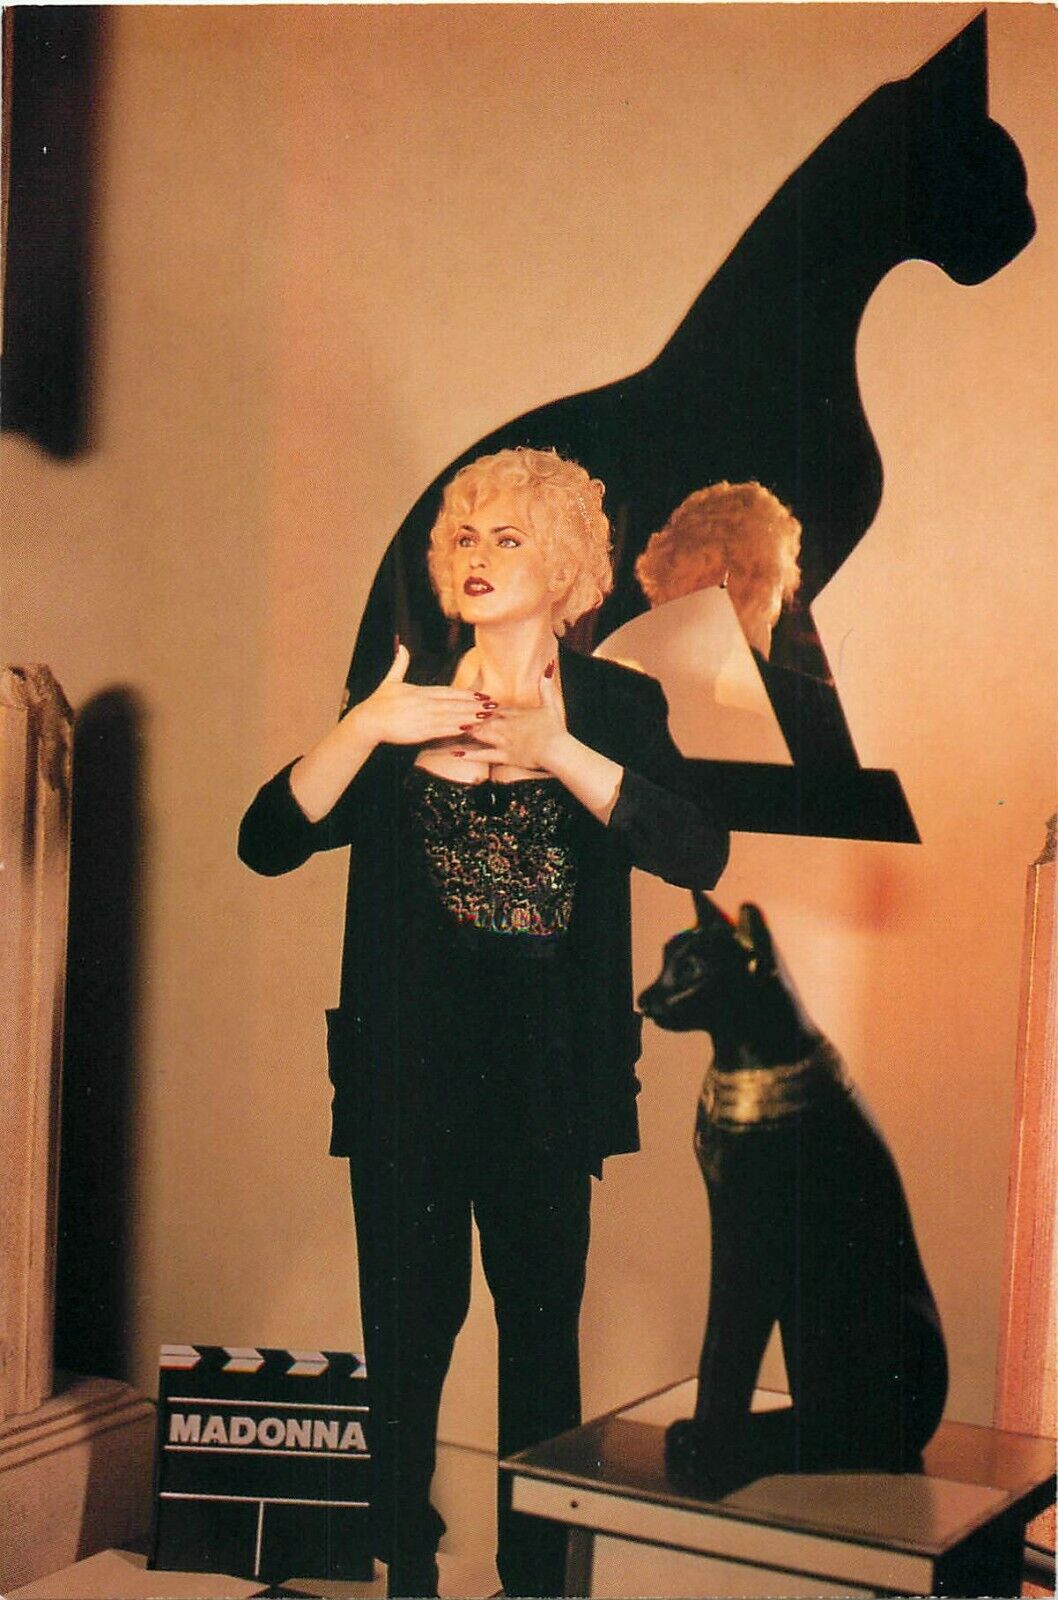  Madonna Vogue Pose Vintage Postcard Movieland Wax Museum Singer Statue 